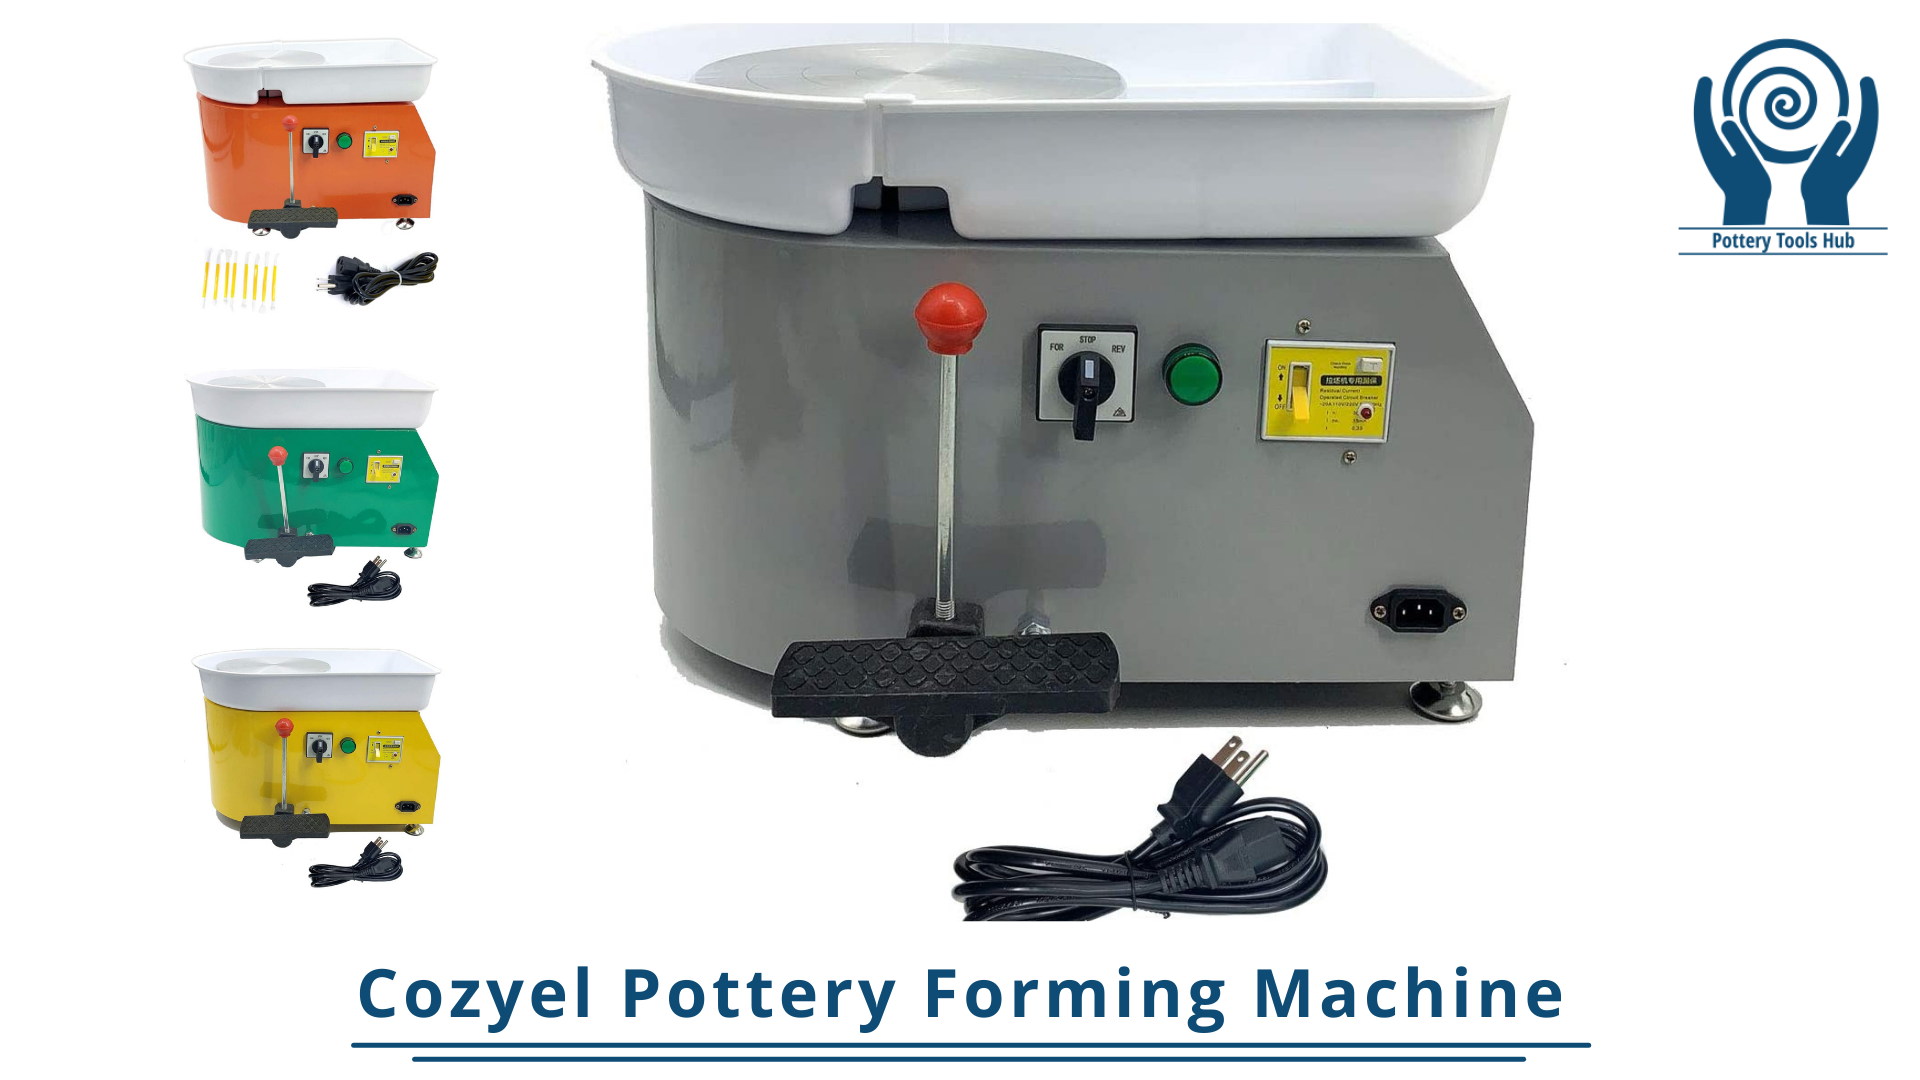 Cozyel Pottery Forming Machine